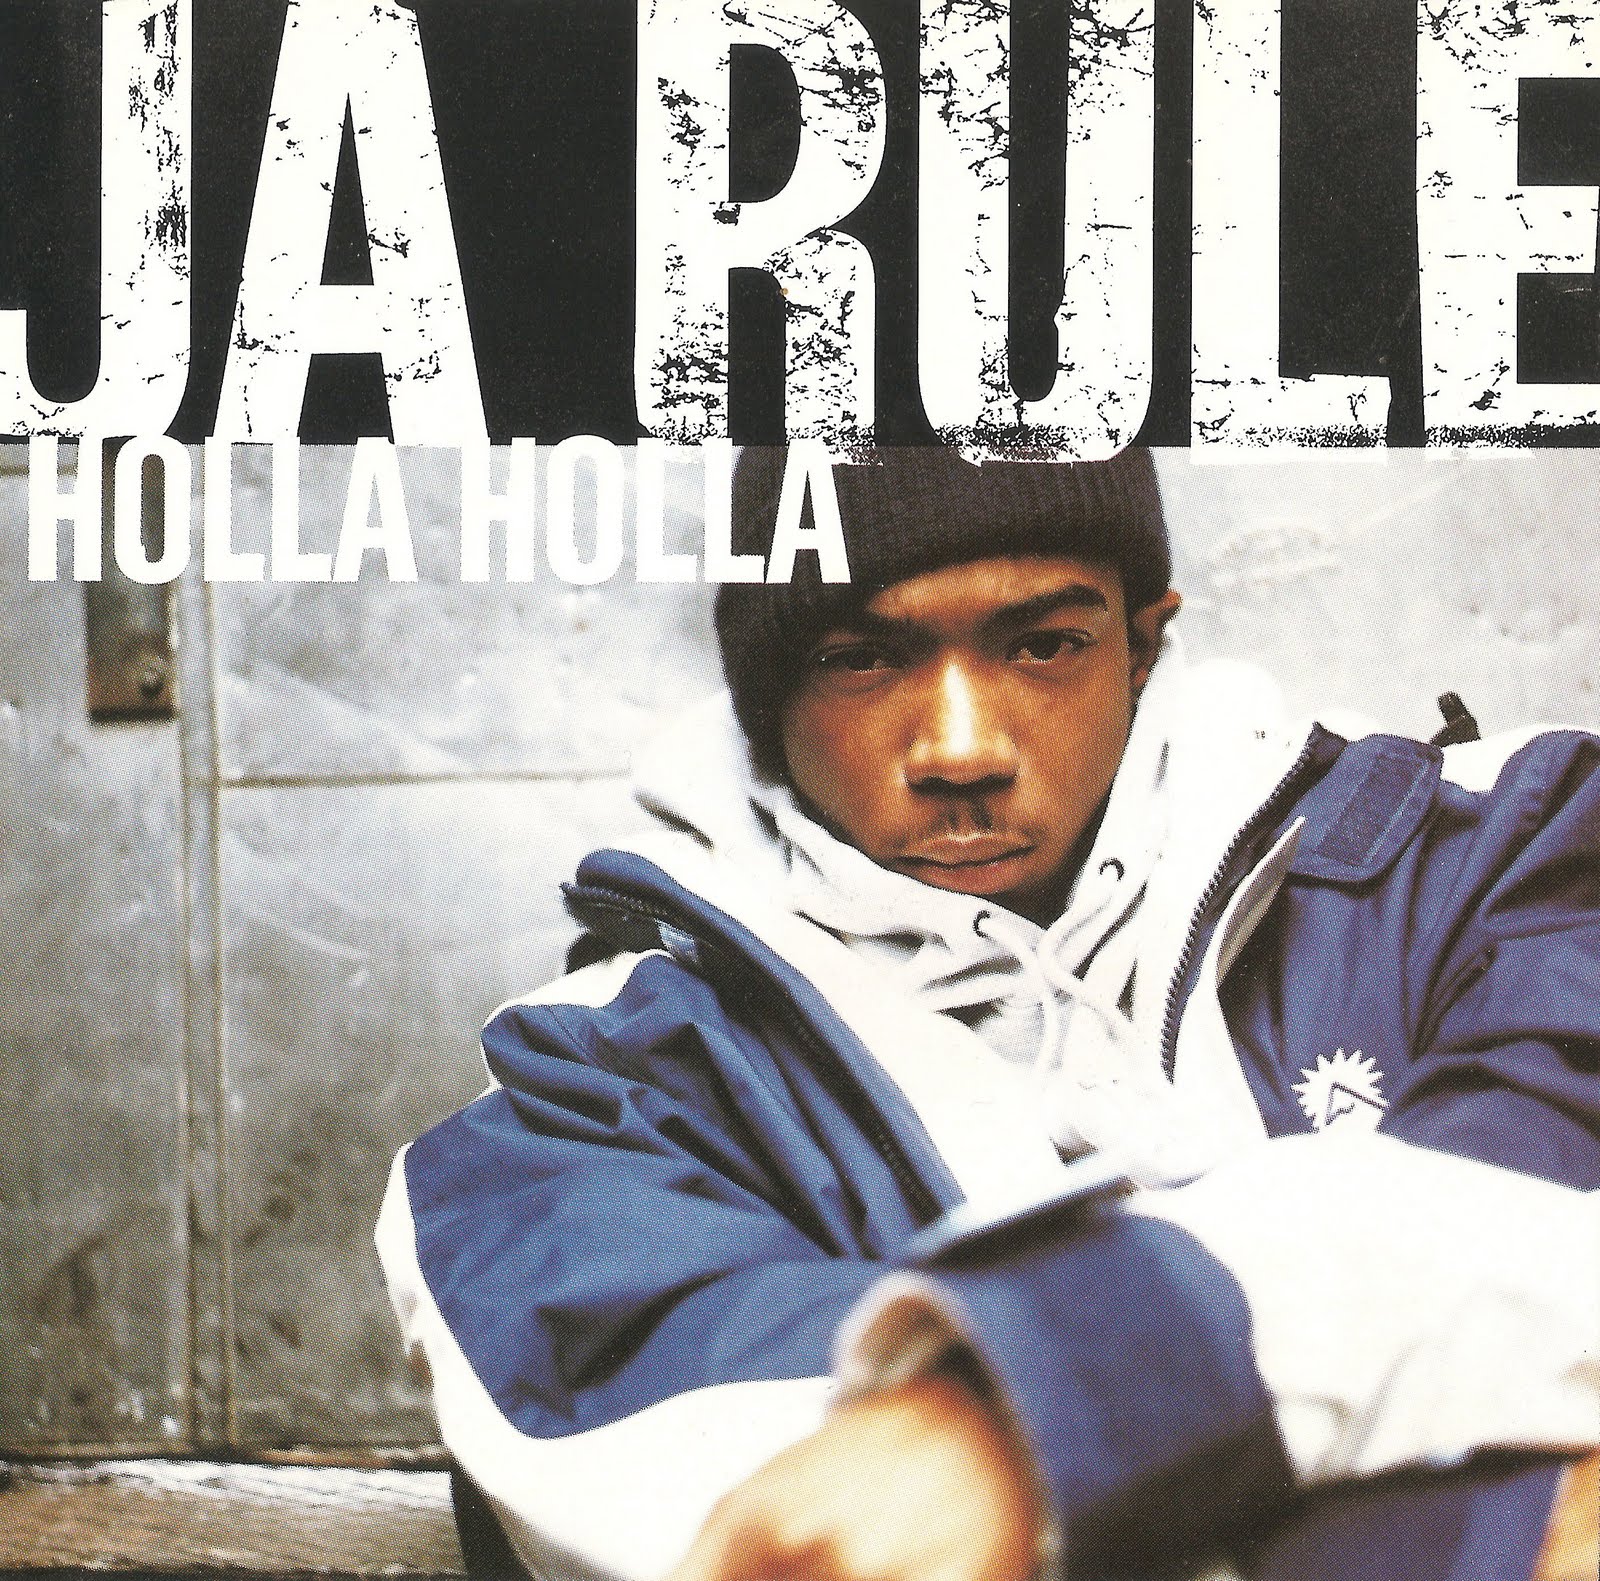 the-crack-factory-ja-rule-holla-holla-cds-1999-rmg